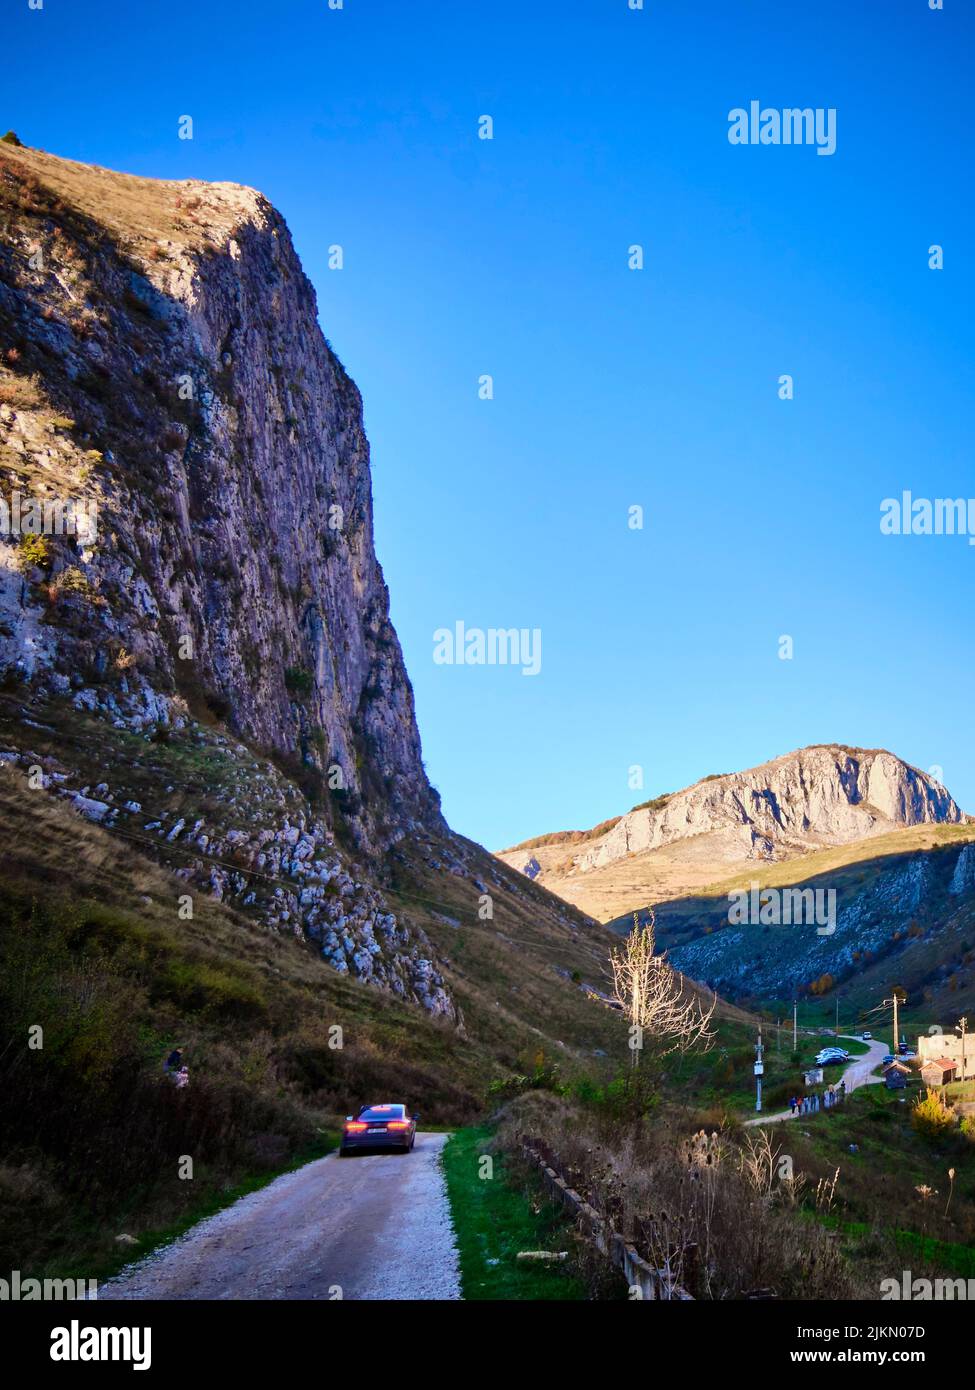 https://c8.alamy.com/comp/2JKN07D/a-vertical-shot-of-a-road-passing-through-carpathian-mountains-against-a-blue-sky-in-romania-2JKN07D.jpg